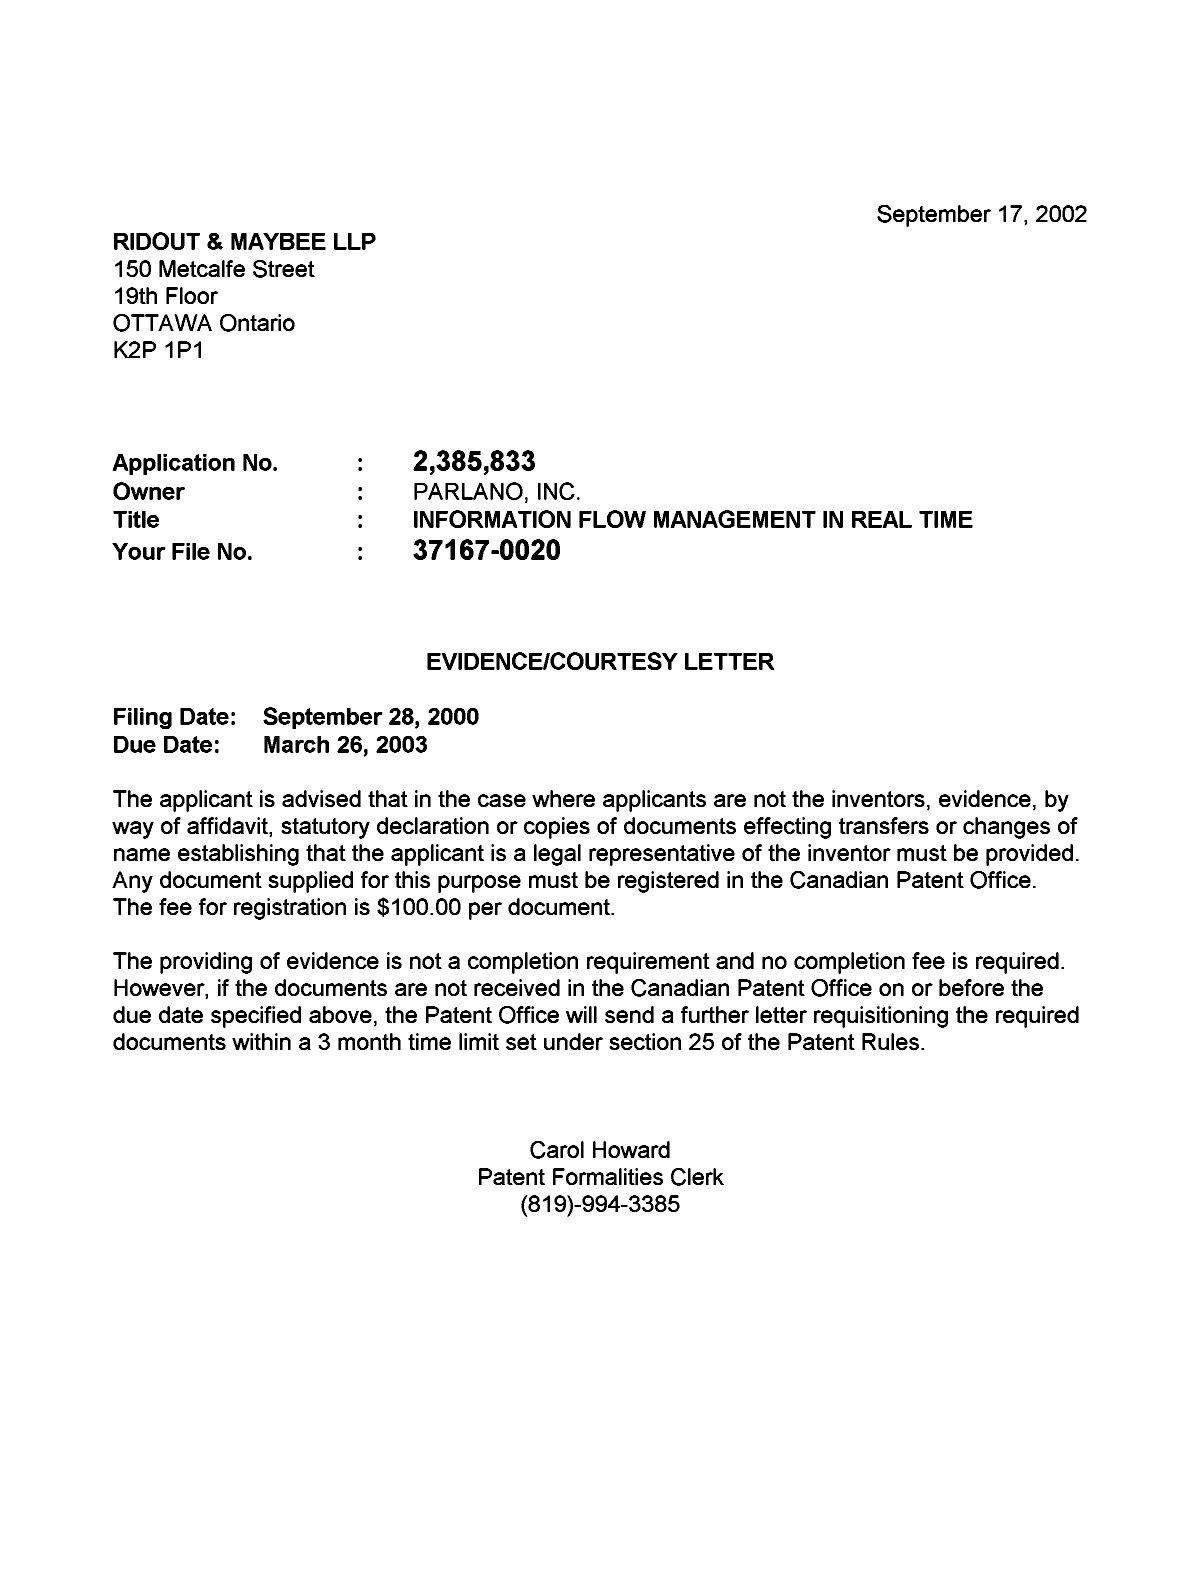 Canadian Patent Document 2385833. Correspondence 20020913. Image 1 of 1